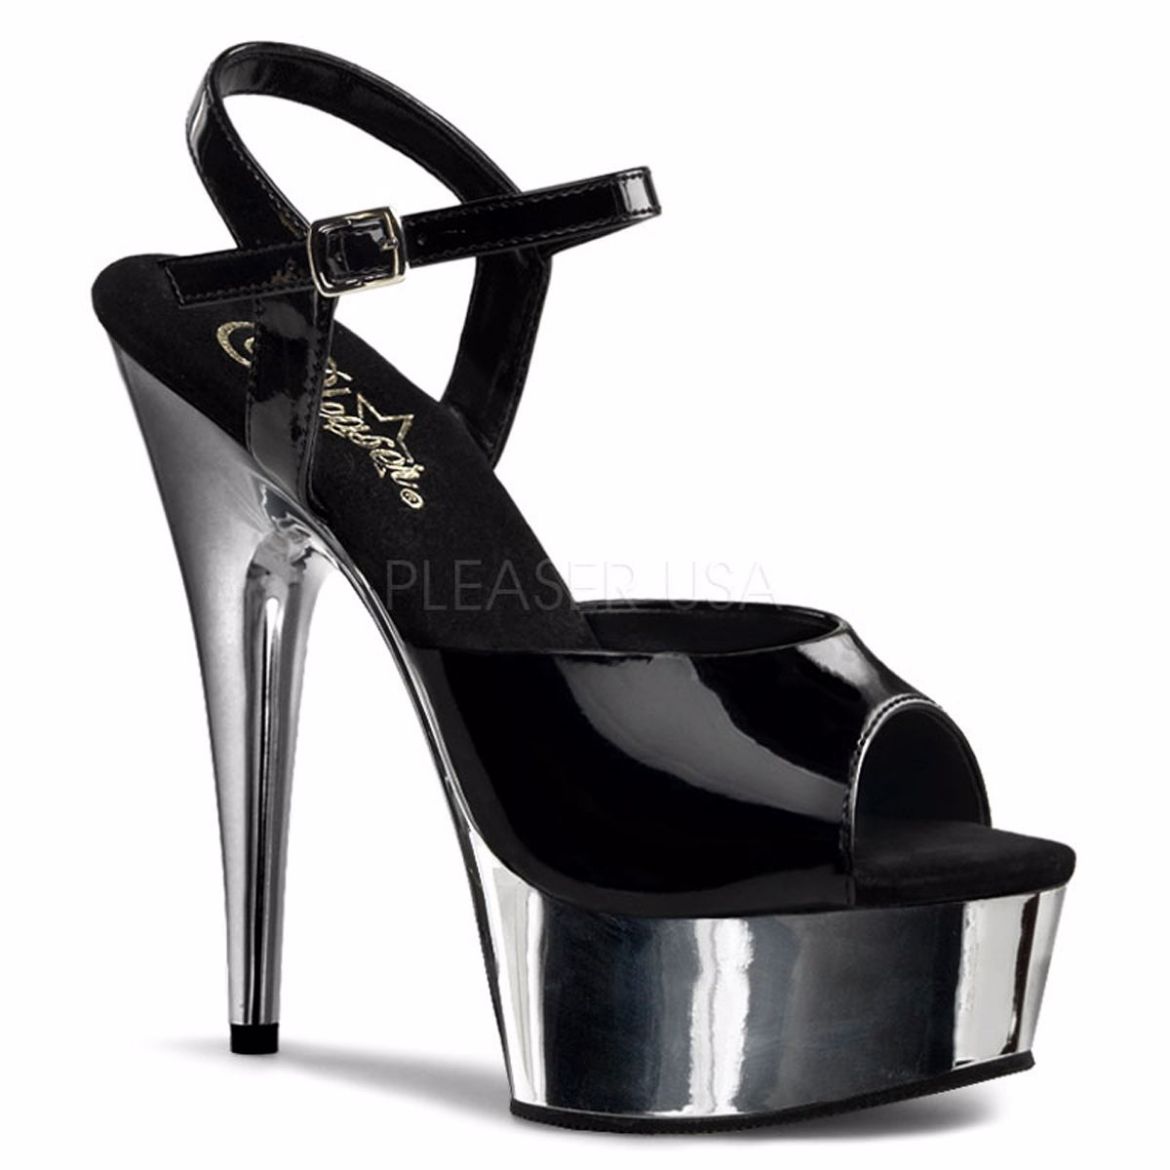 Product image of Pleaser Delight-609 Black/Silver Chrome, 6 inch (15.2 cm) Heel, 1 3/4 inch (4.4 cm) Platform Sandal Shoes